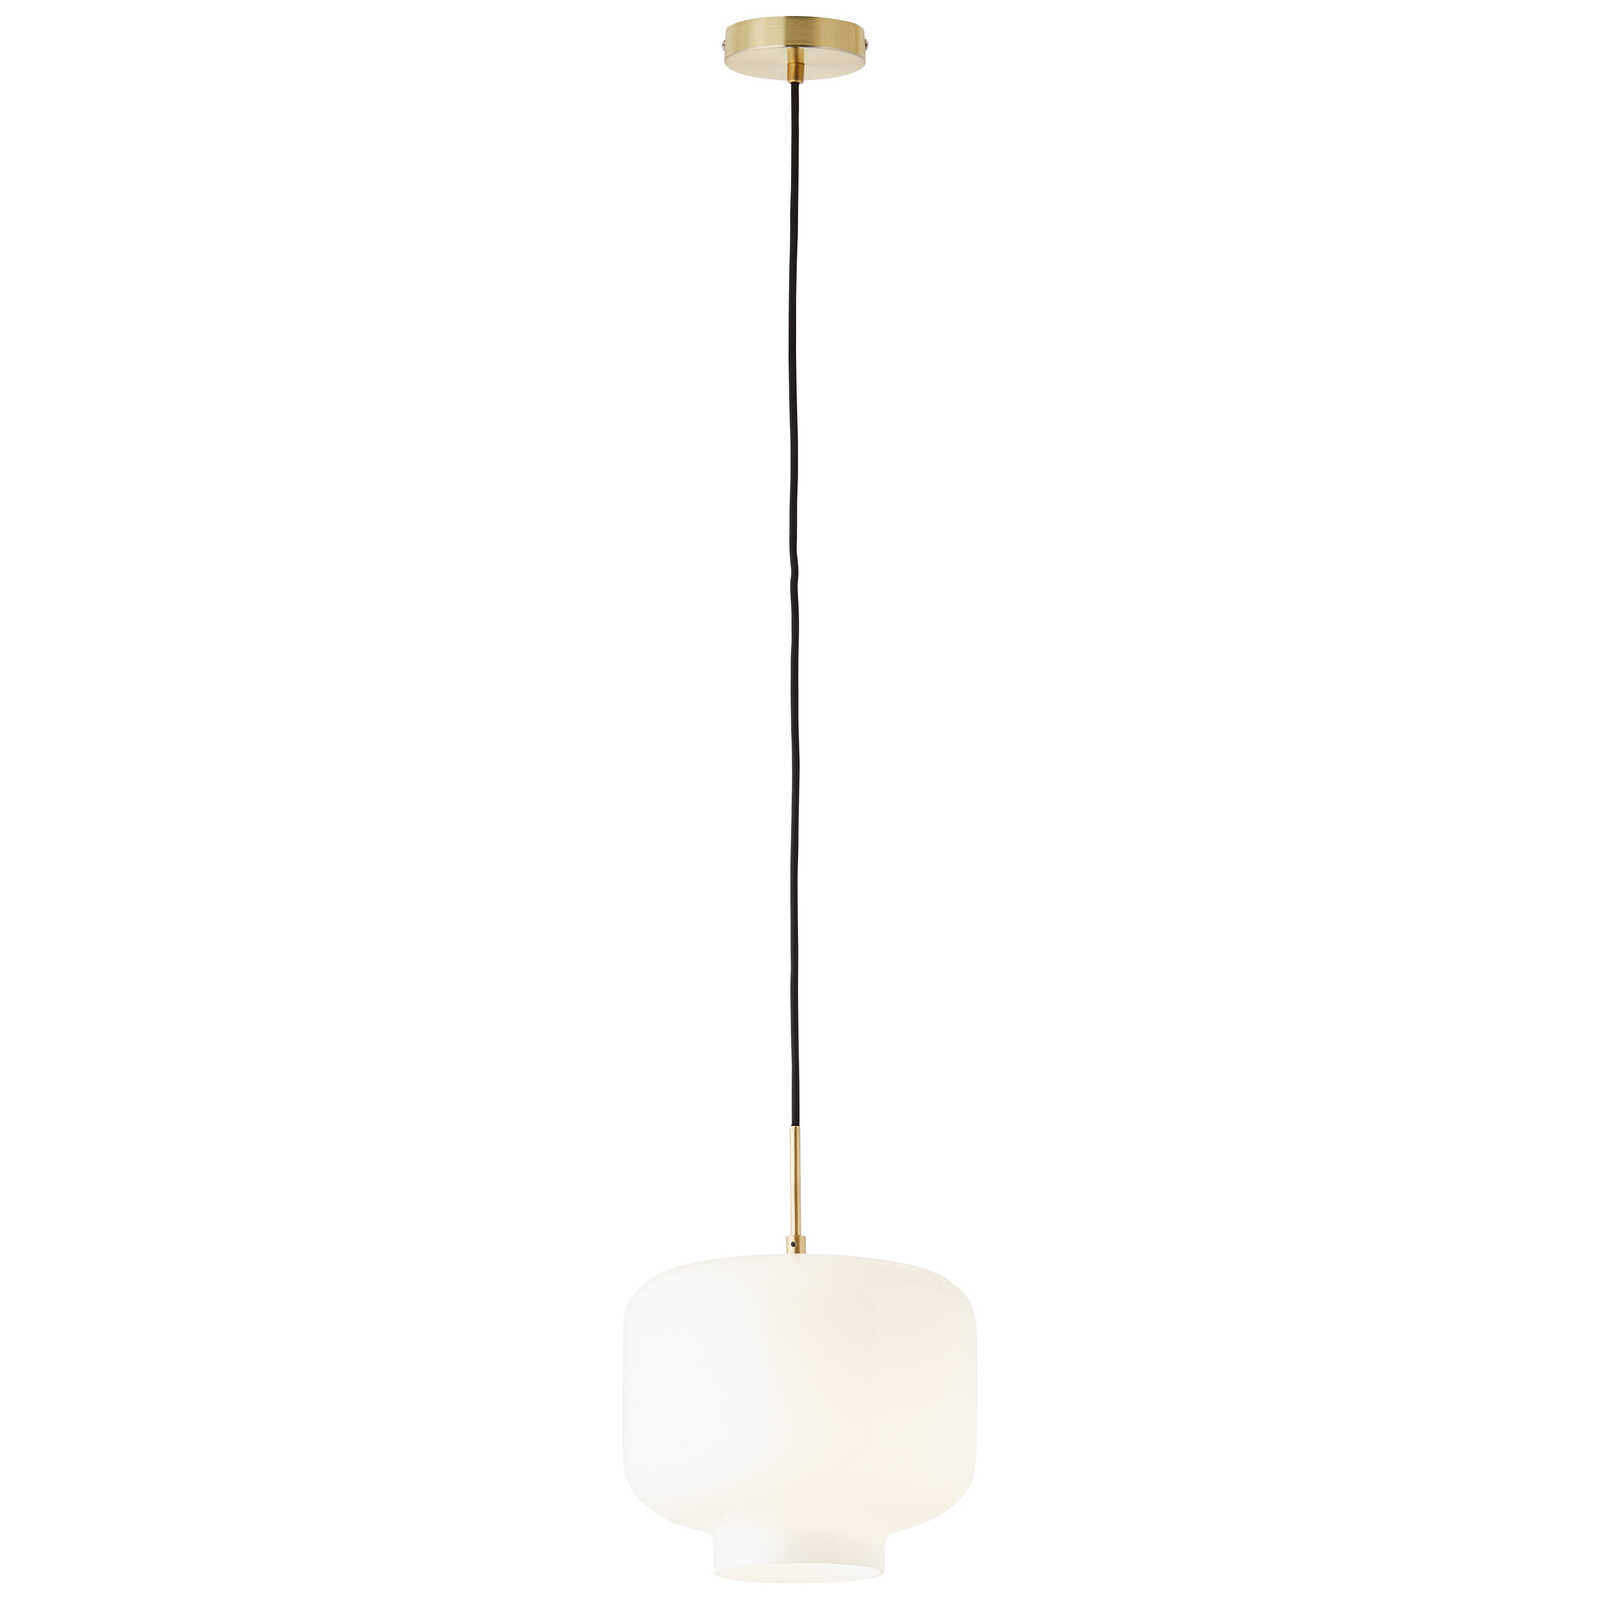             Glazen hanglamp - Keno 1 - Goud
        